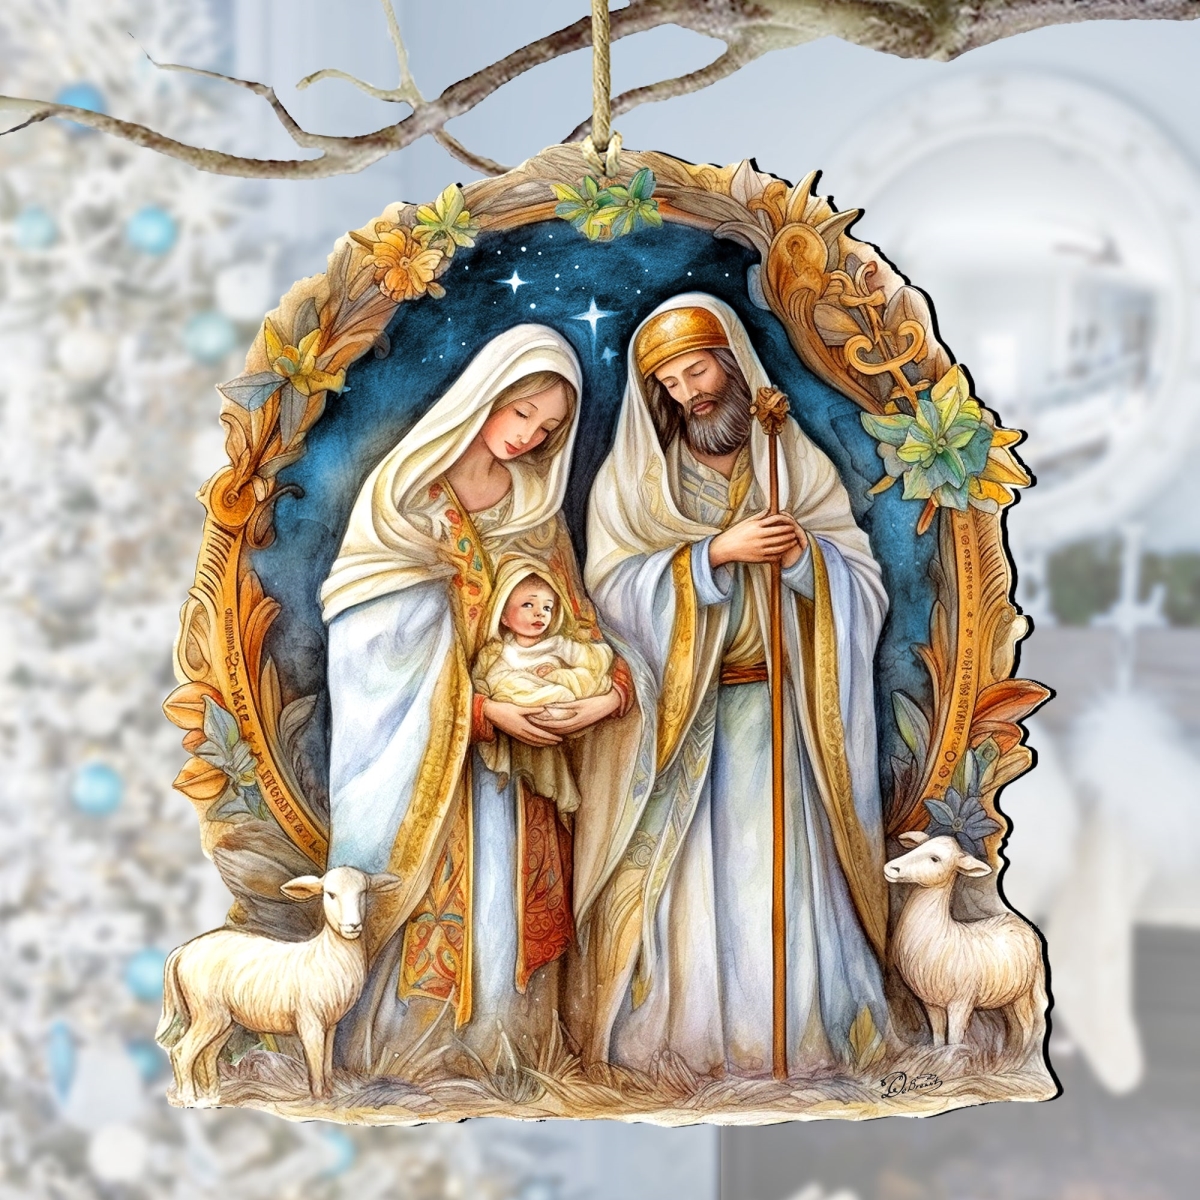 Designocracy 8611074 5 x 5.5 x 0.25 in. Nostalgic Nativity Scene Wooden Nativity Holiday Decor Ornaments